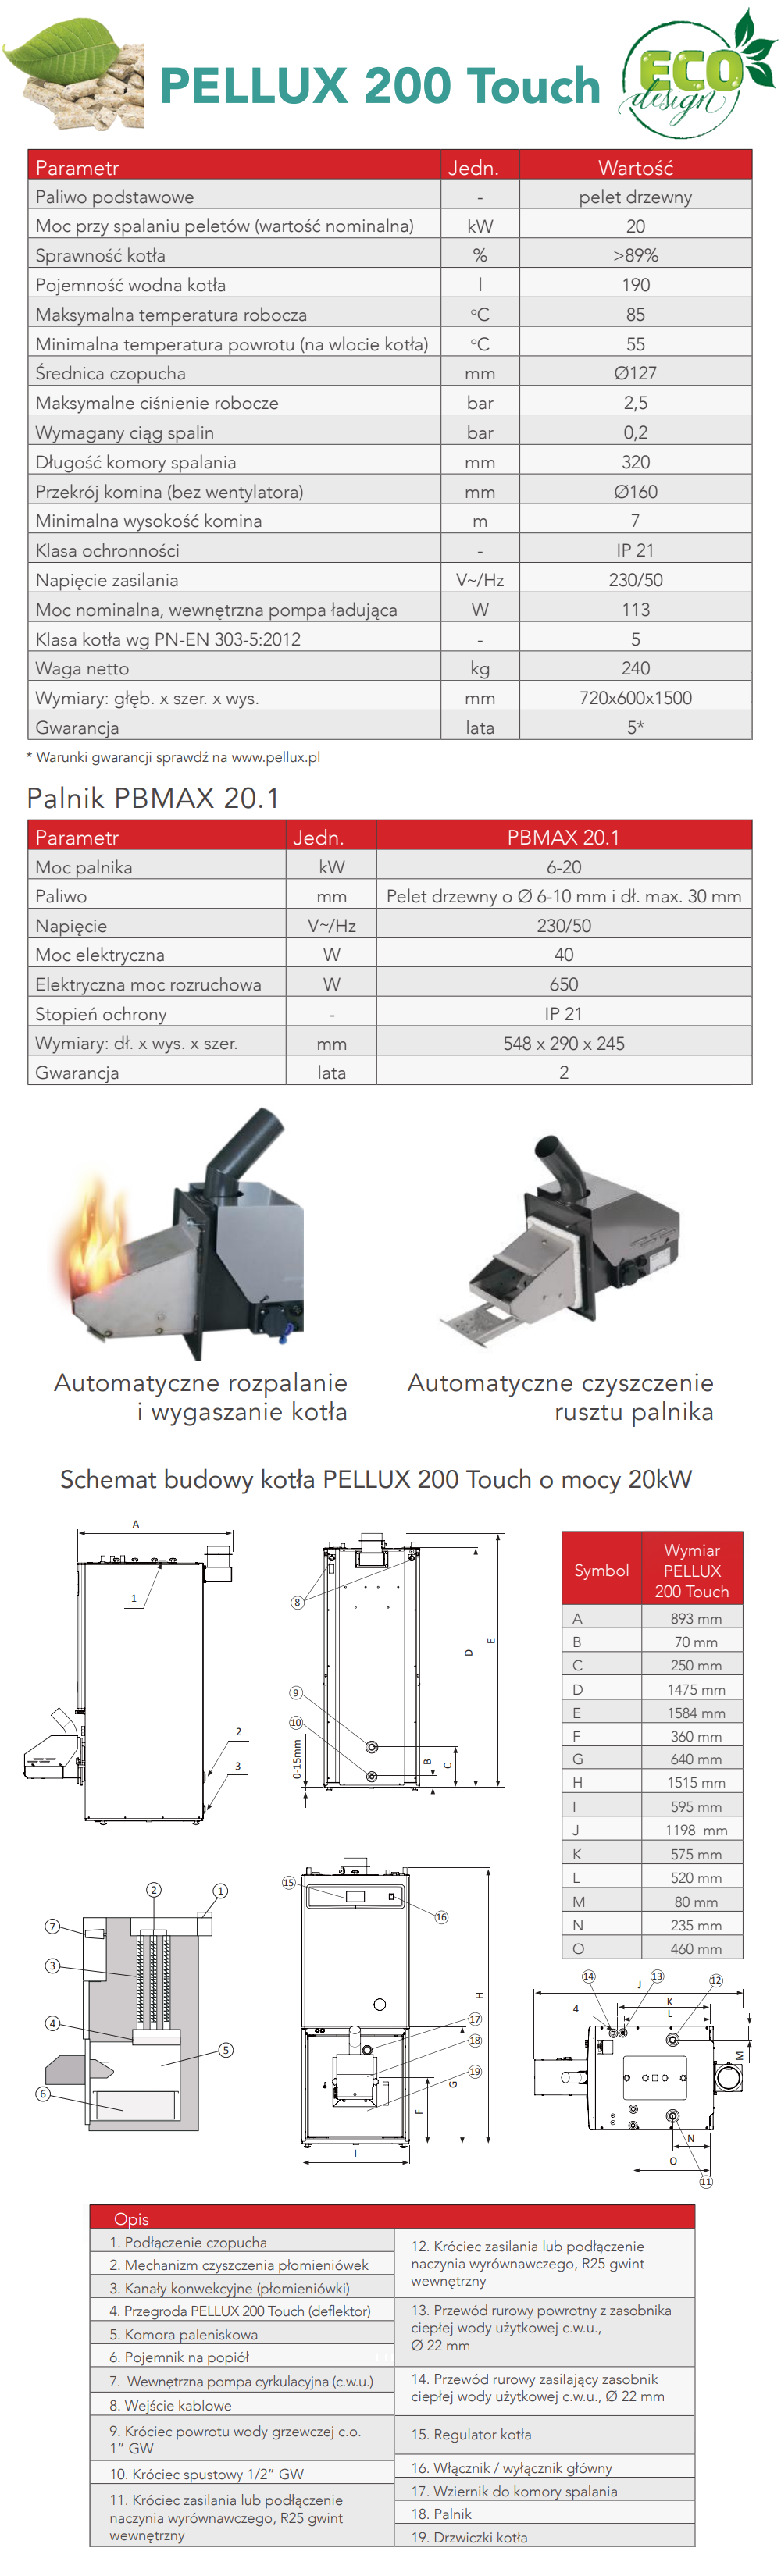 Parametry techniczne kotła Biawar Pellux 200 Touch